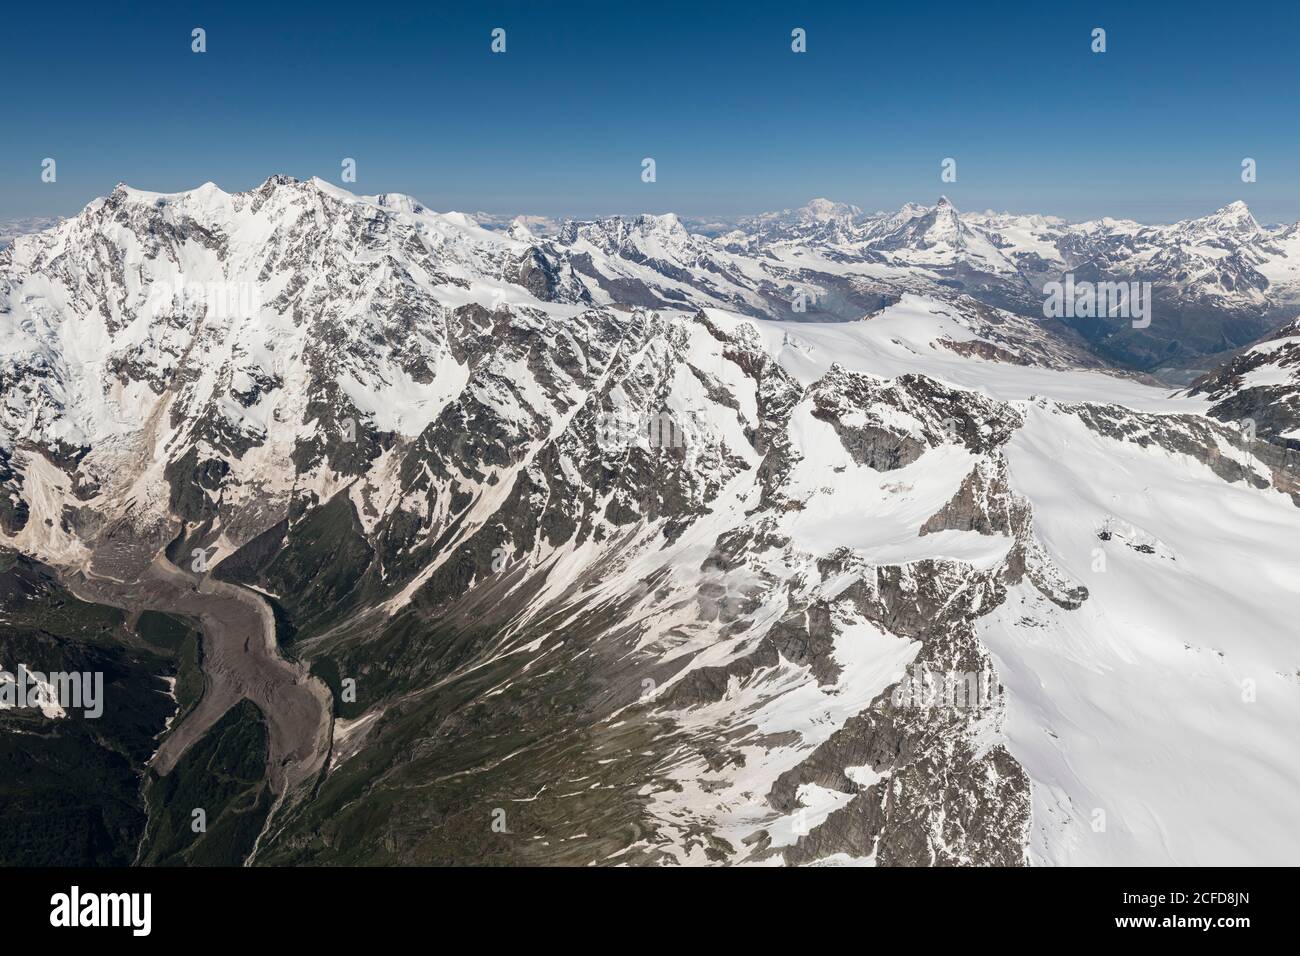 Italy, Piedmont, Switzerland, Valais canton, Monte Rosa massif, Liskamm, Breithorn, Matterhorn and Dent Blanche, in the background Mont Blanc Stock Photo